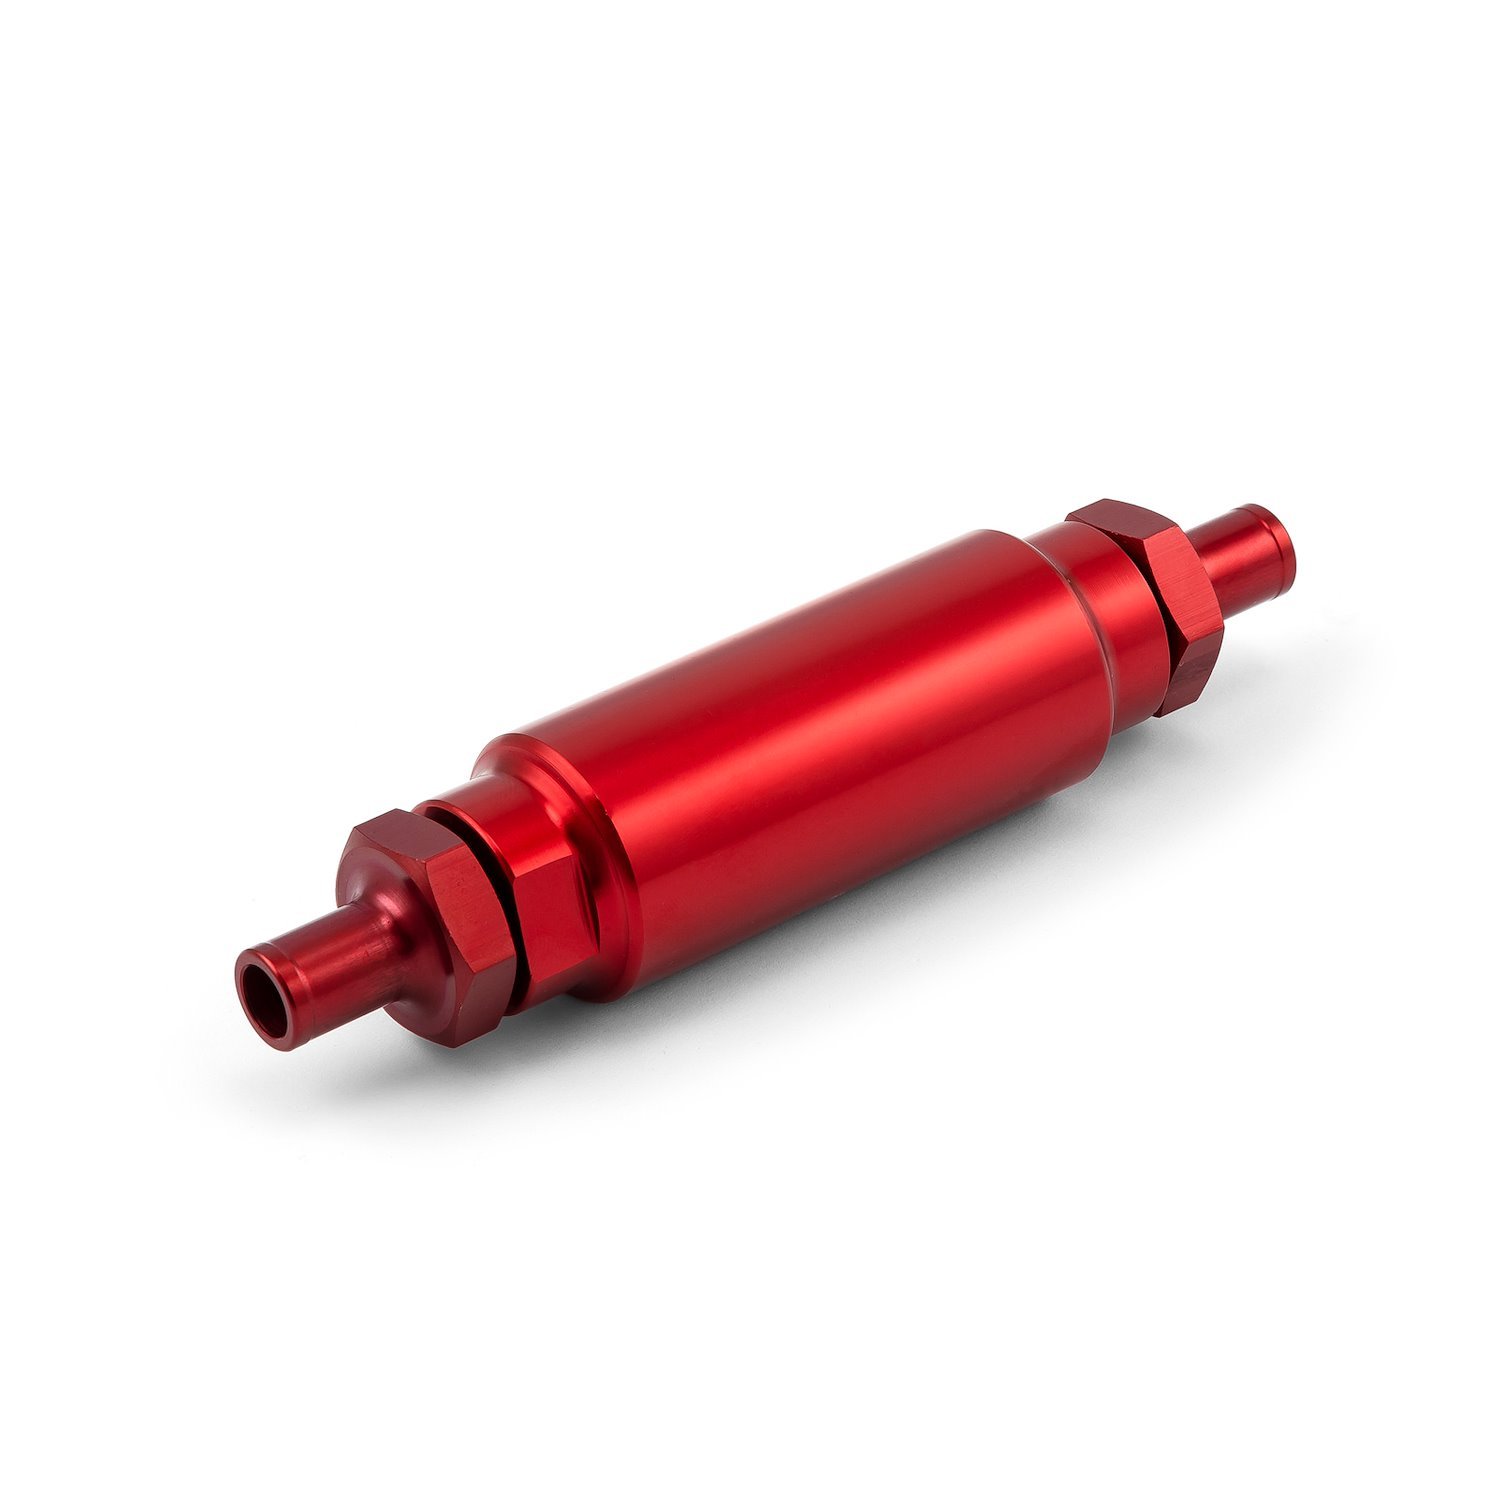 PCE132.1009.03 Inline Billet Aluminum Fuel Filter [9/16-18 - 9/16-18 Male, Red]